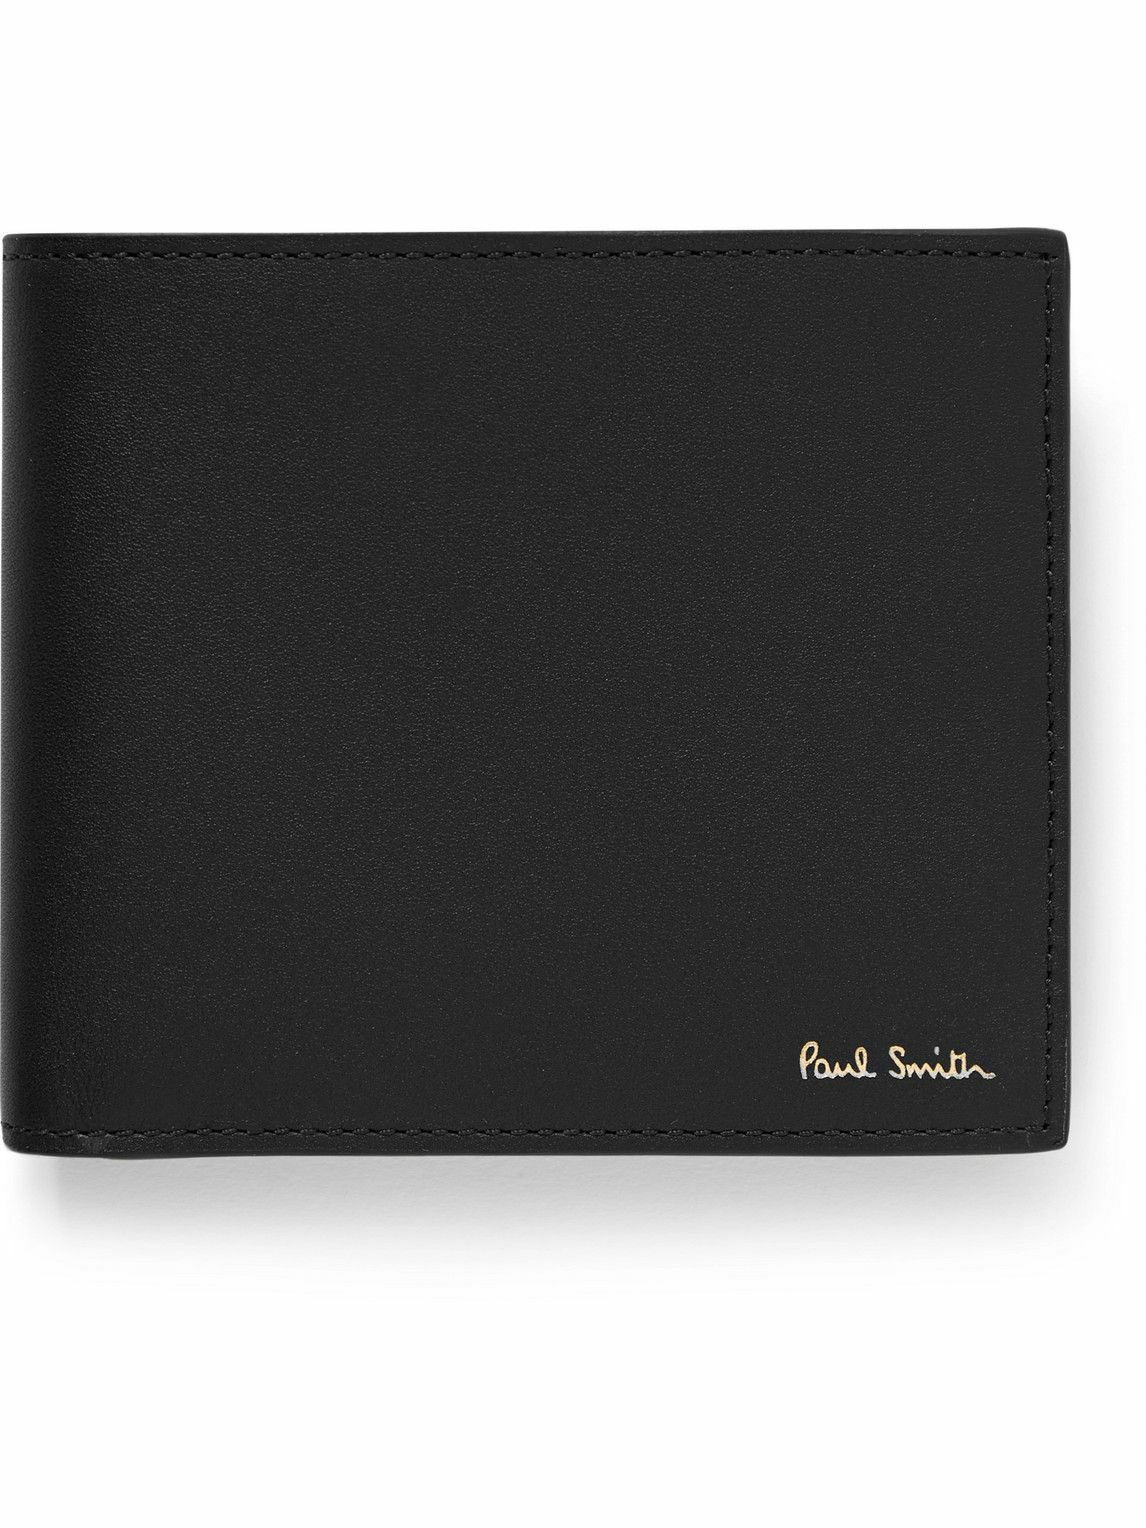 Paul Smith - Leather Billfold Wallet Paul Smith